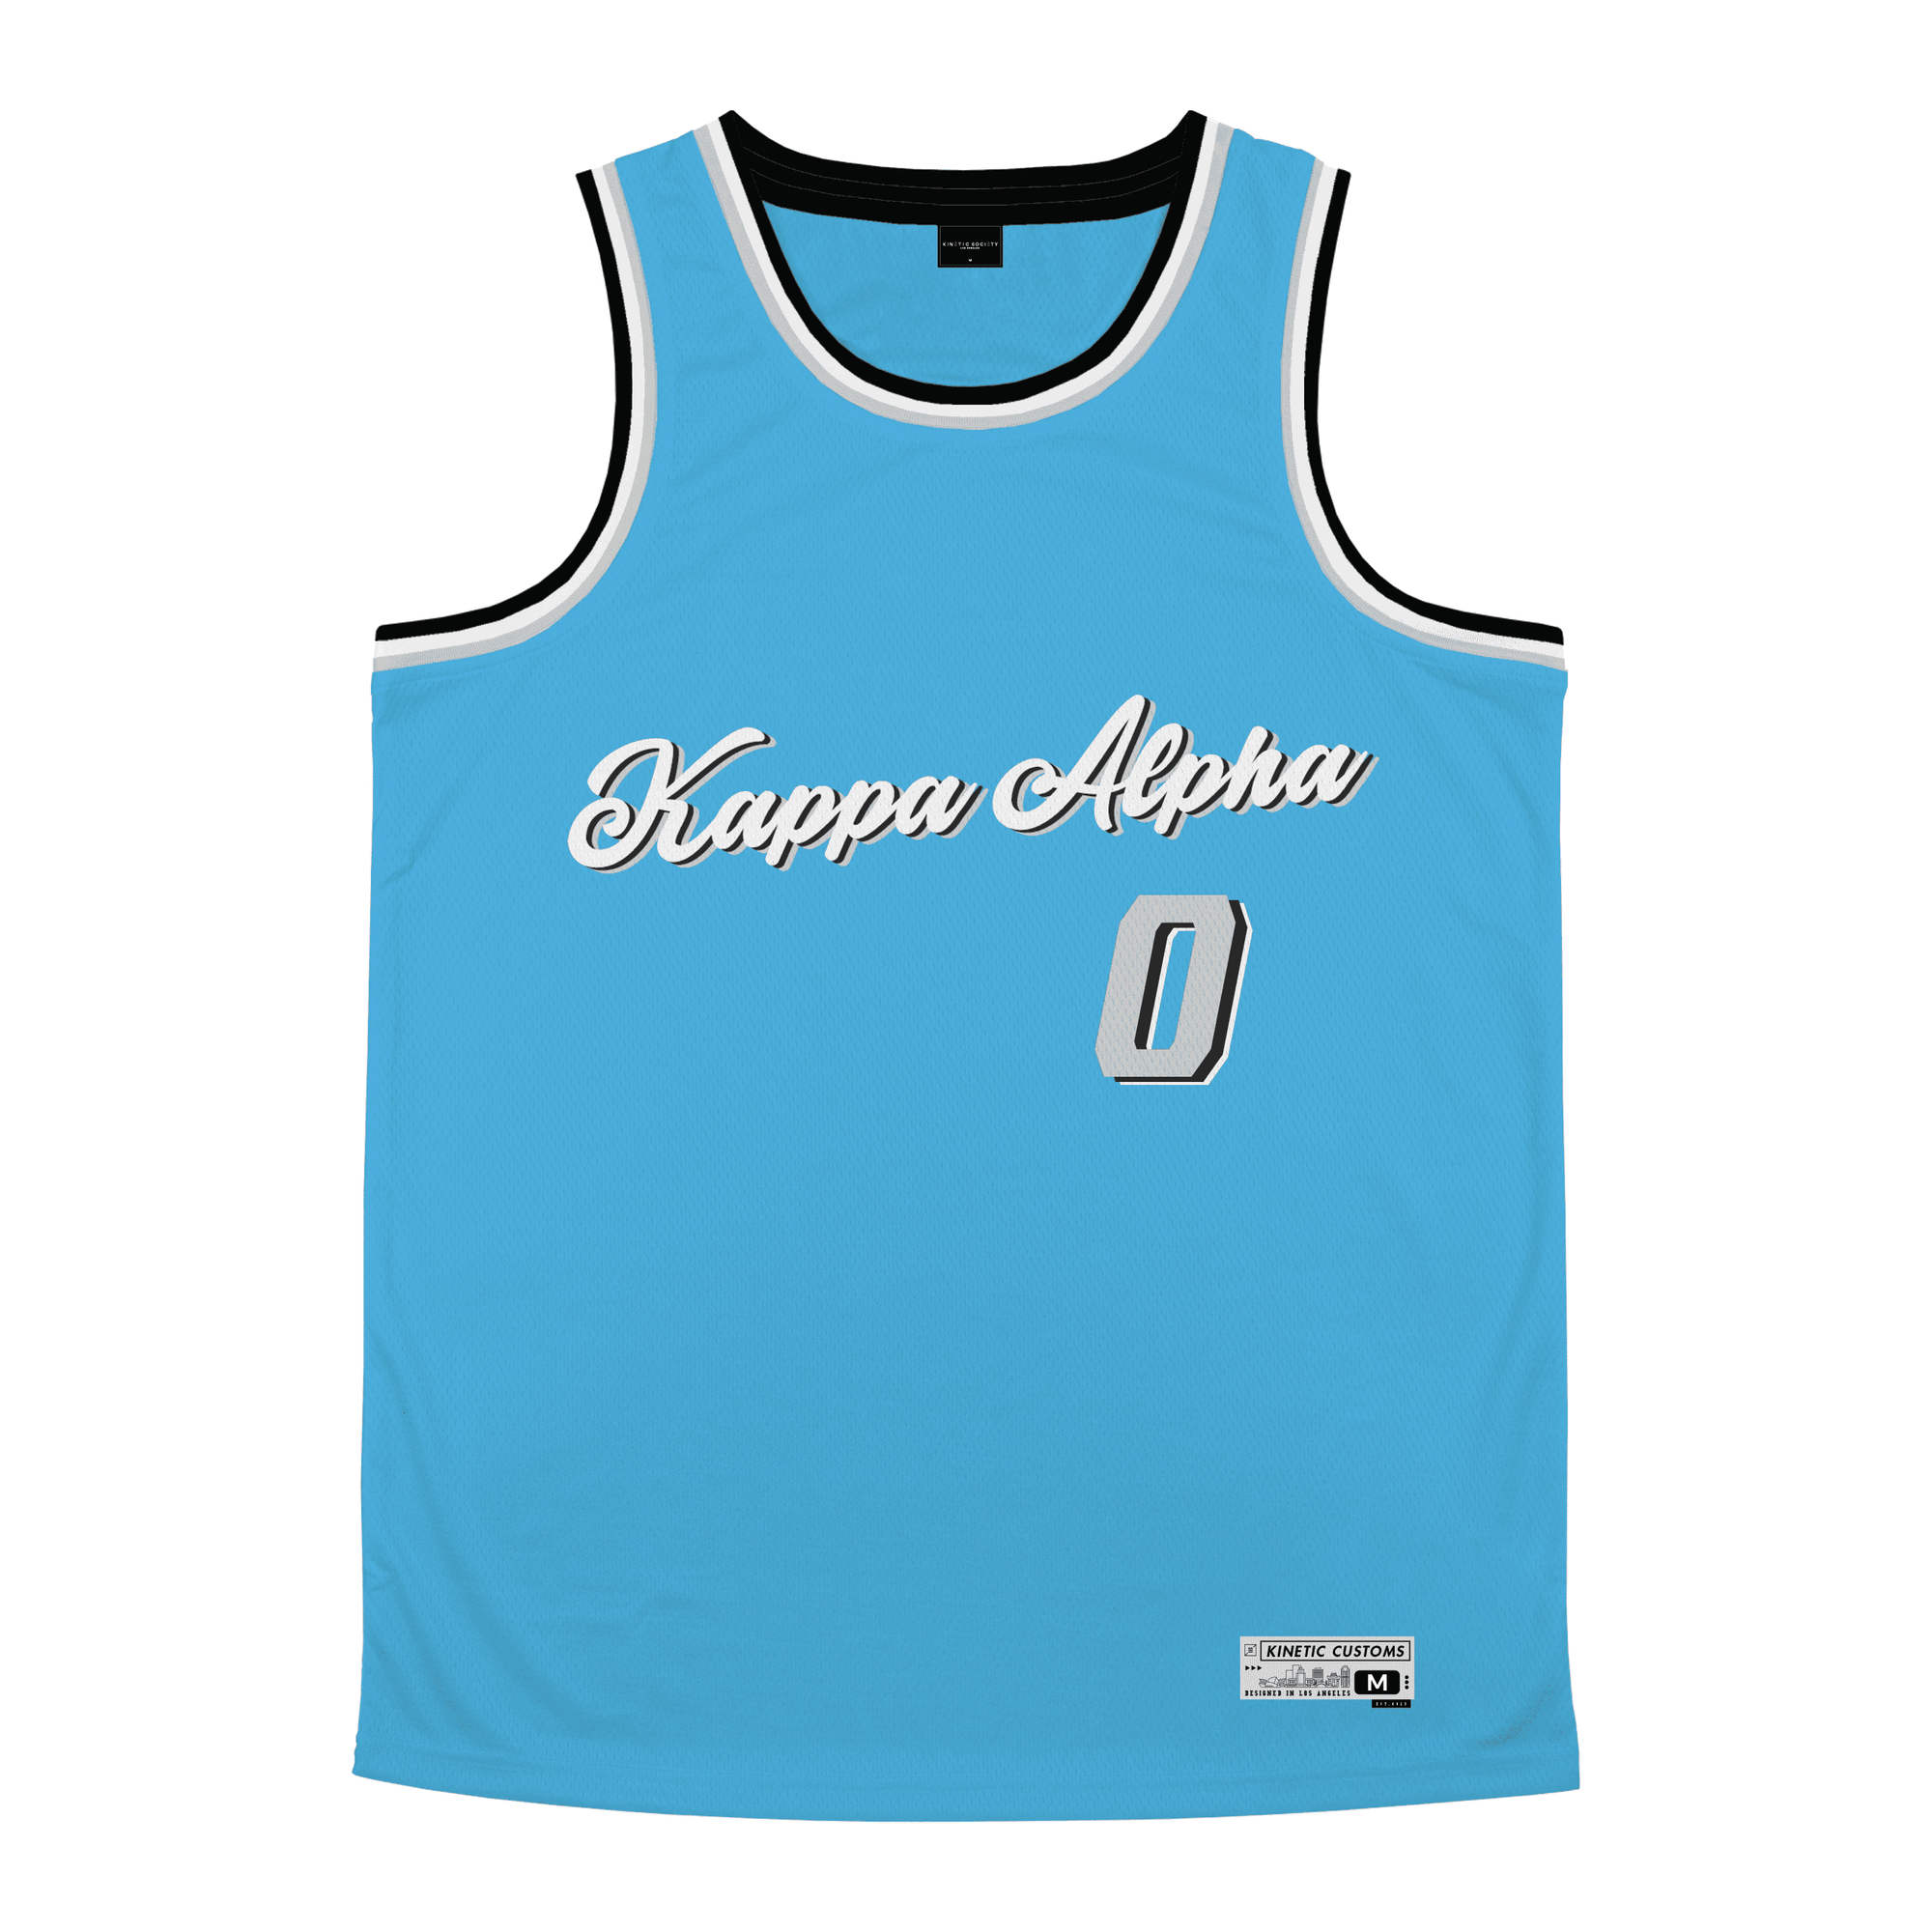 Kappa Alpha Order - Pacific Mist Basketball Jersey